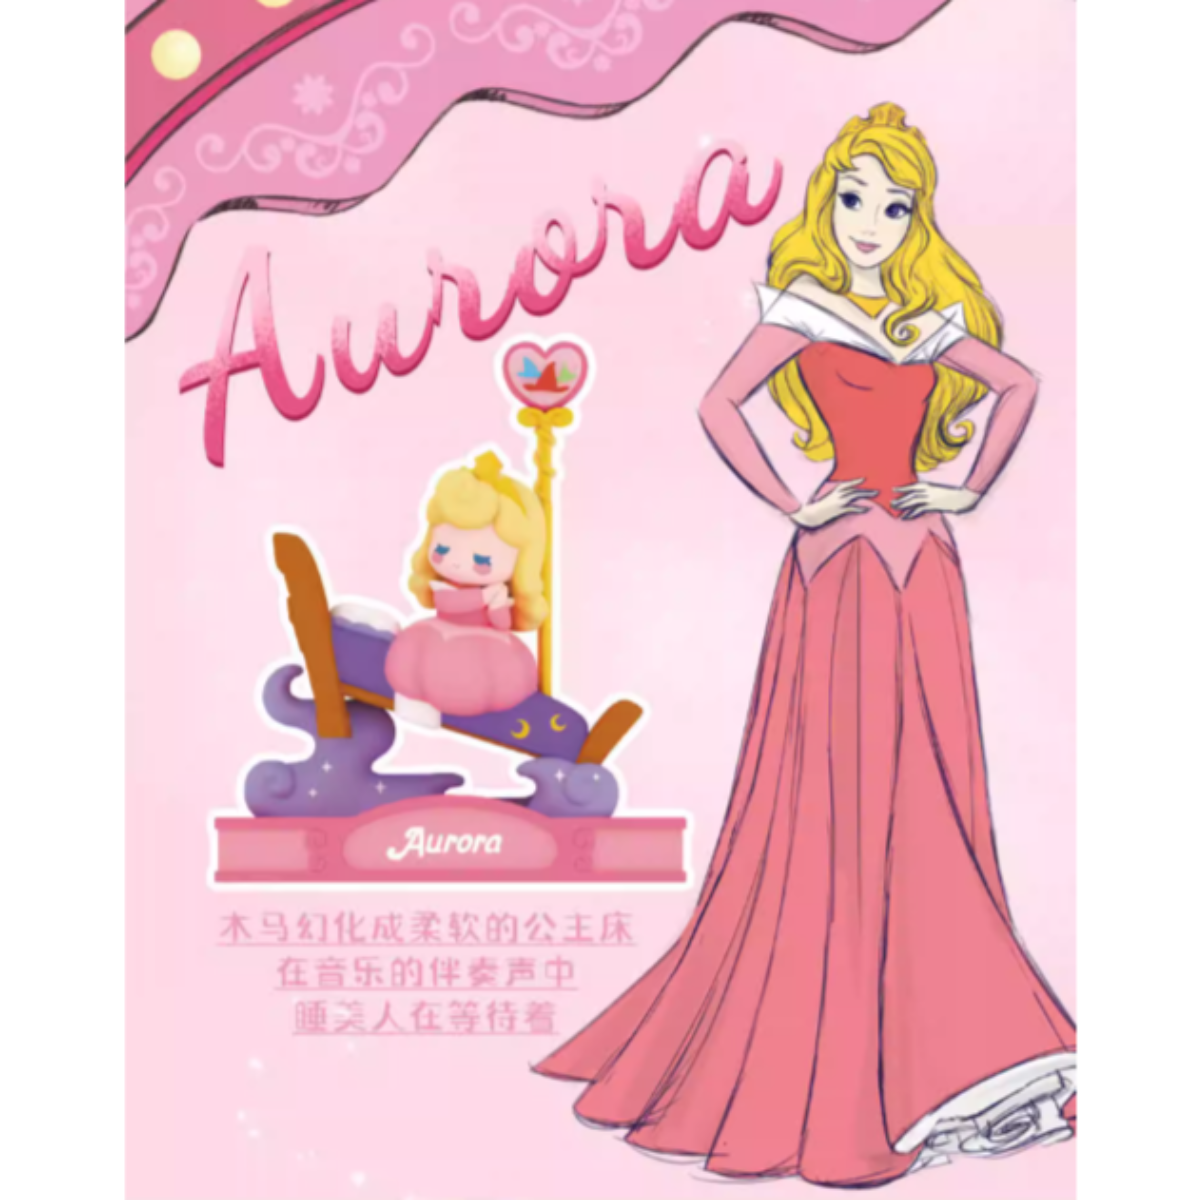 52Toys x Disney Princess Carousel Series-Single Box (Random)-52Toys-Ace Cards &amp; Collectibles